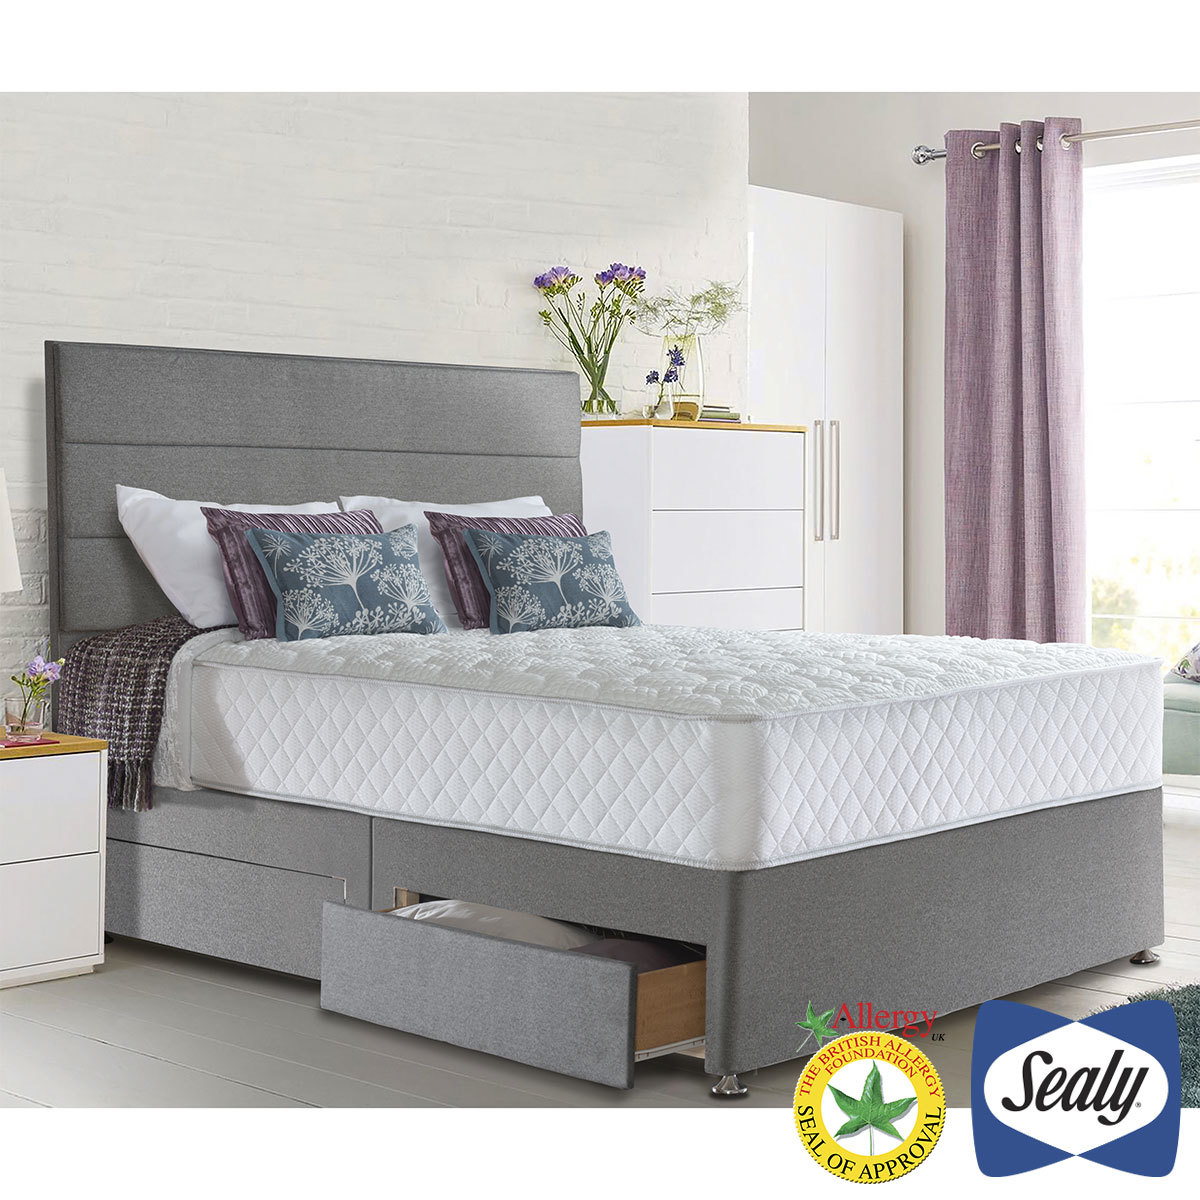 Sealy dual spring mattress with grey divan